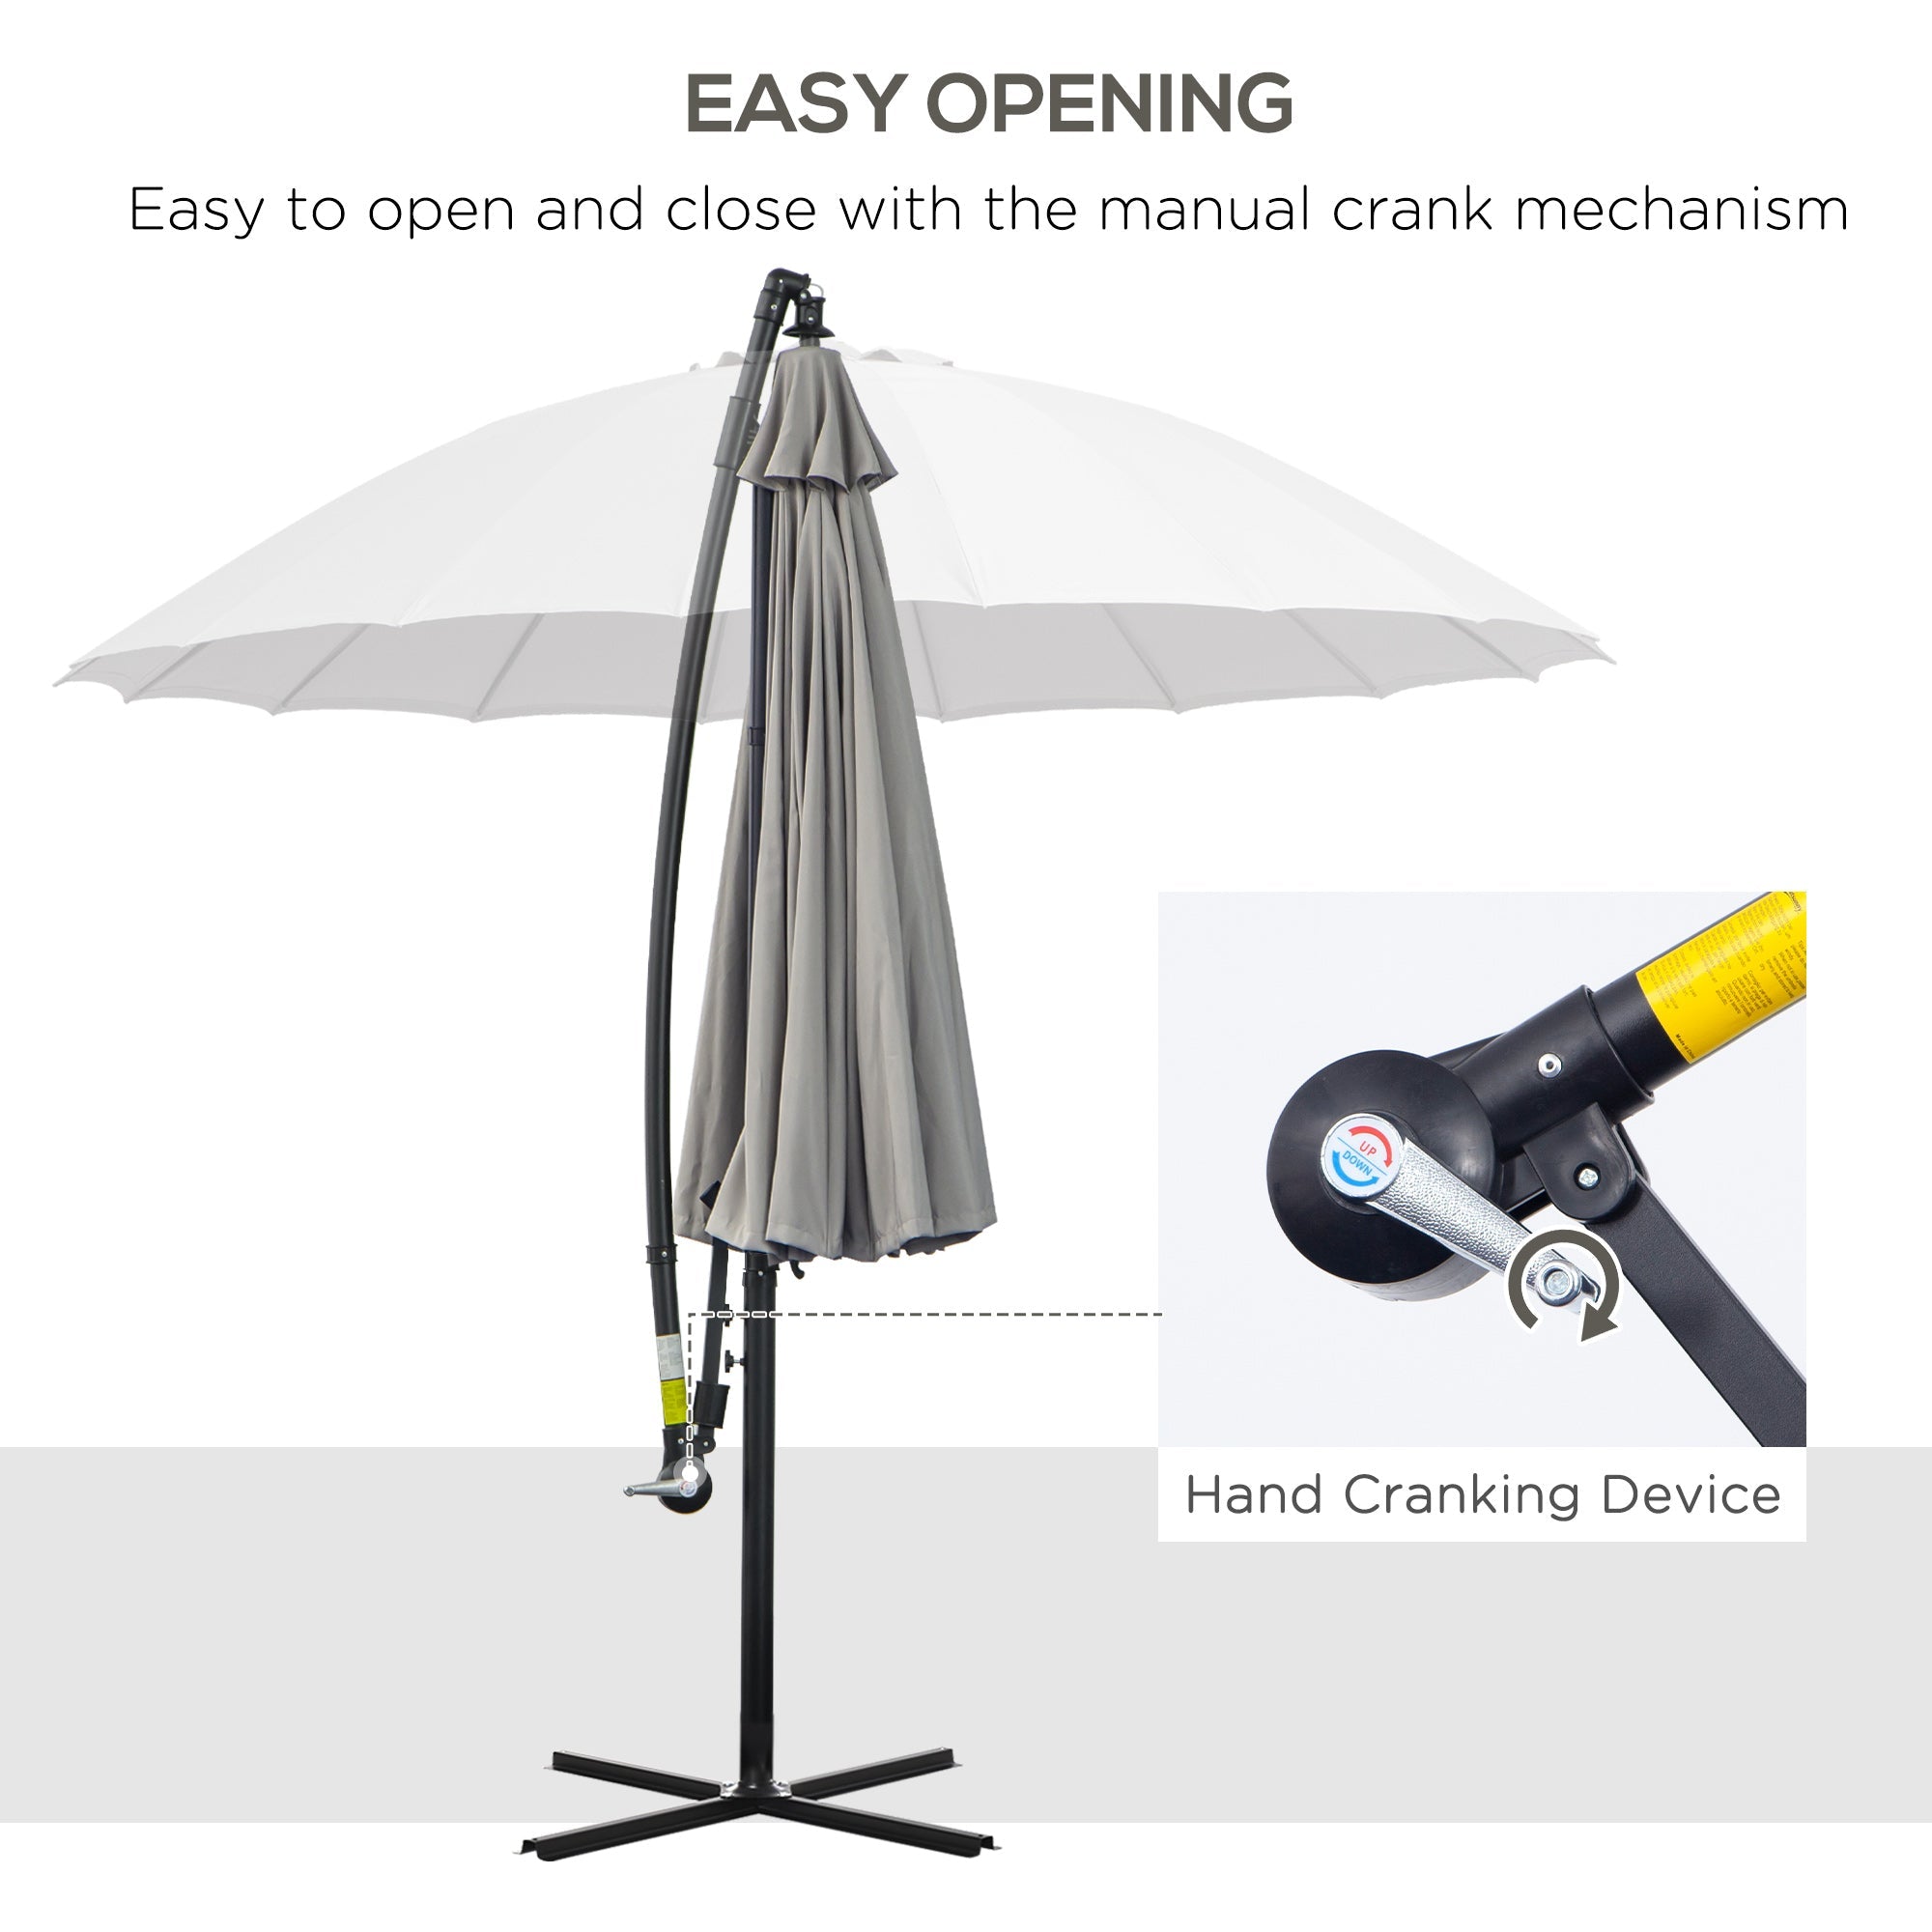 3(m) Cantilever Garden Hanging Banana Sun Umbrella with Crank Handle, 18 Sturdy Ribs and Cross Base, Grey-3